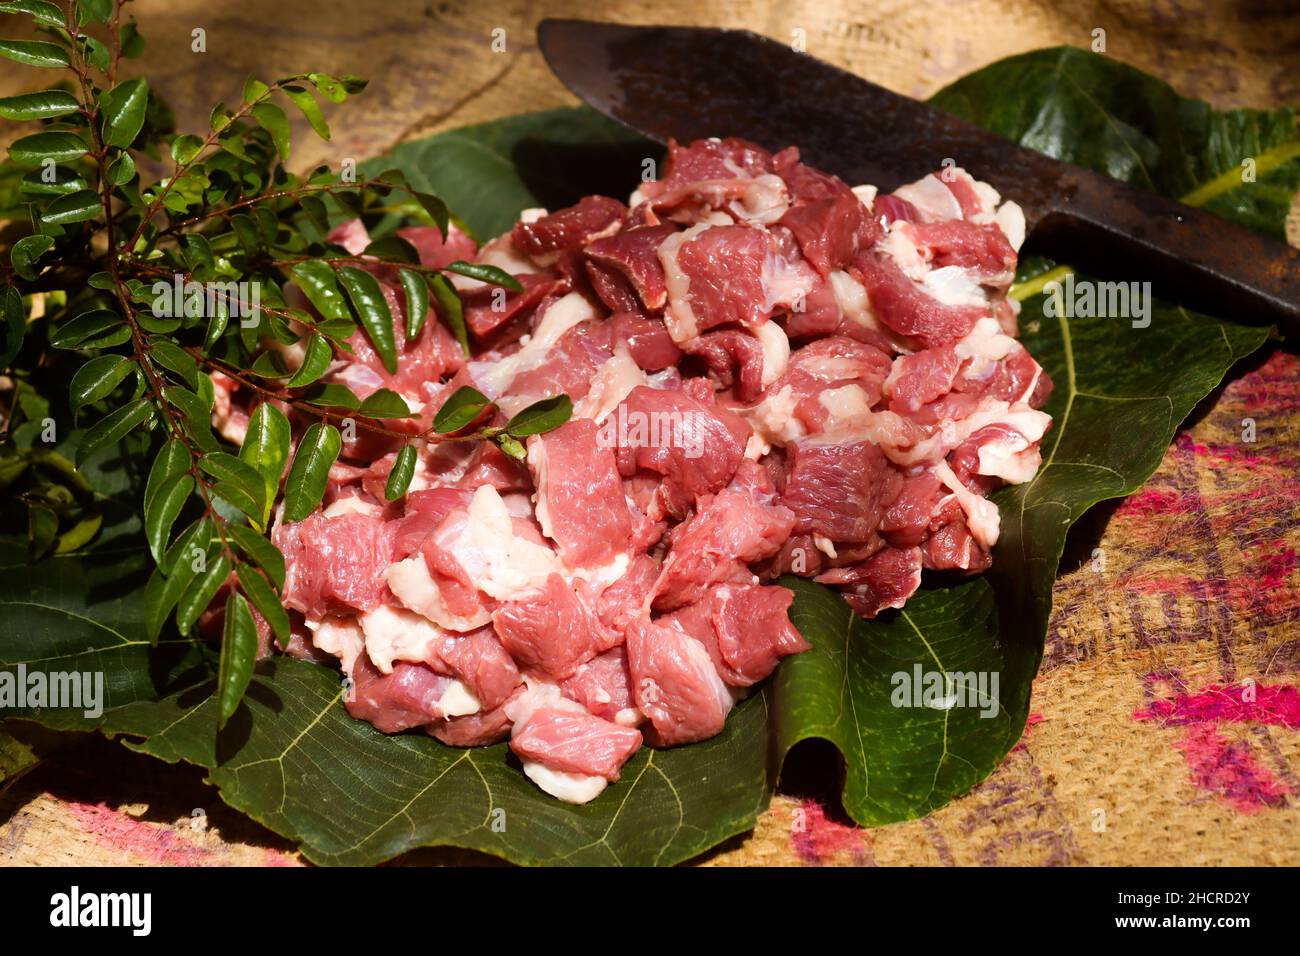 Beef raw Buffalo meat Stock Photo